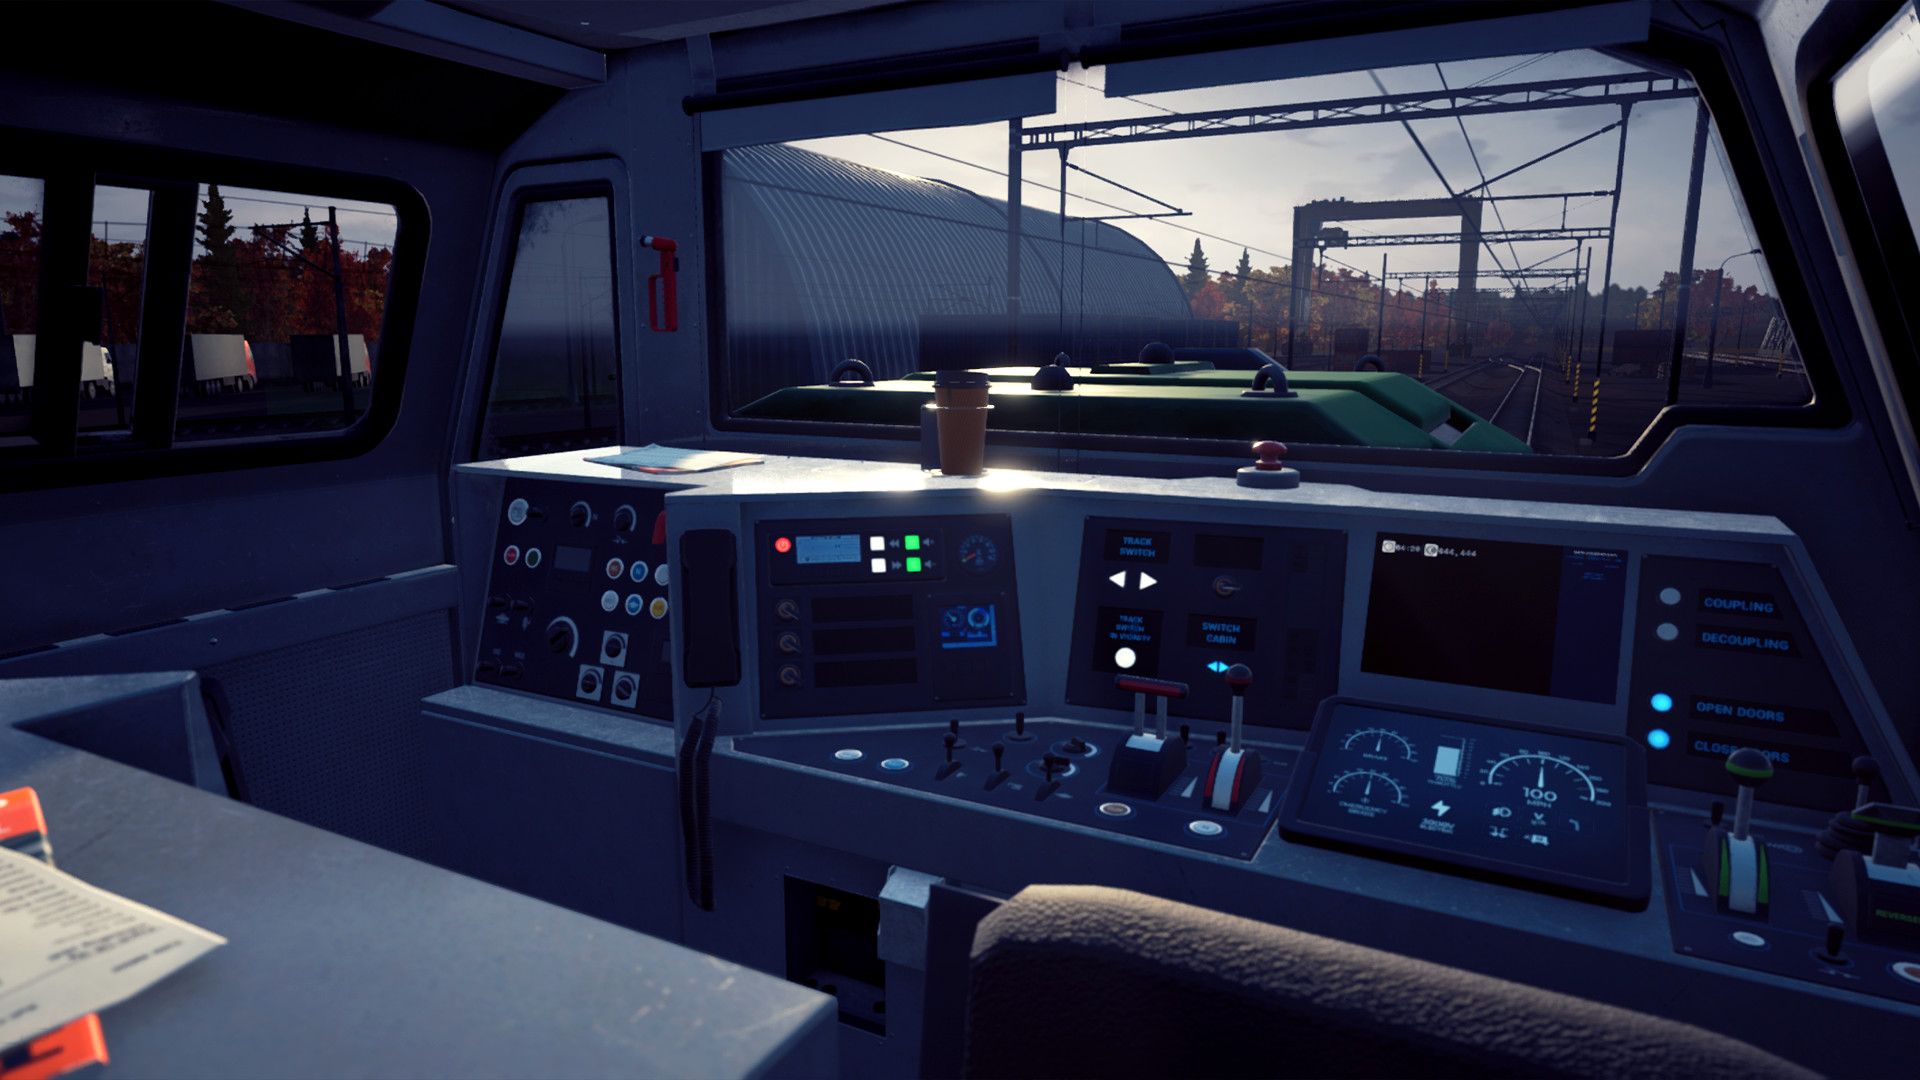 [$ 4.52] Train Life: A Railway Simulator Steam Account